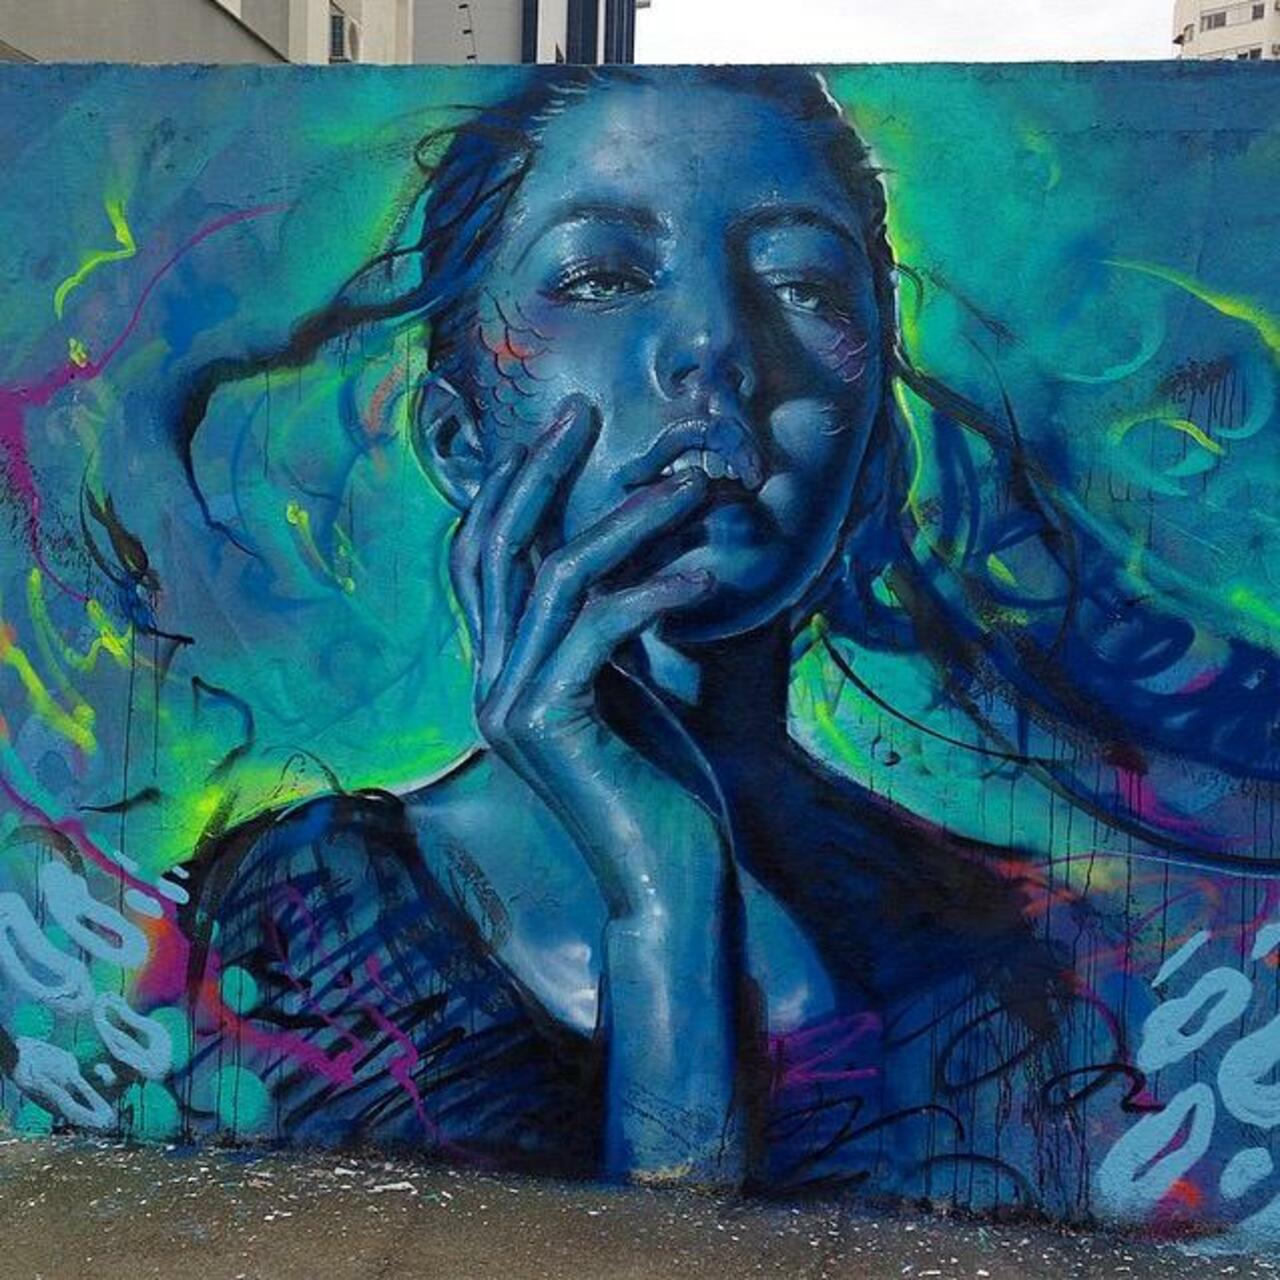 RT @victor254news: Thiago Valdi new Street Art piece titled 'Day Dreamer'

#art #mural #graffiti #streetart http://t.co/RlN9ahJK8H